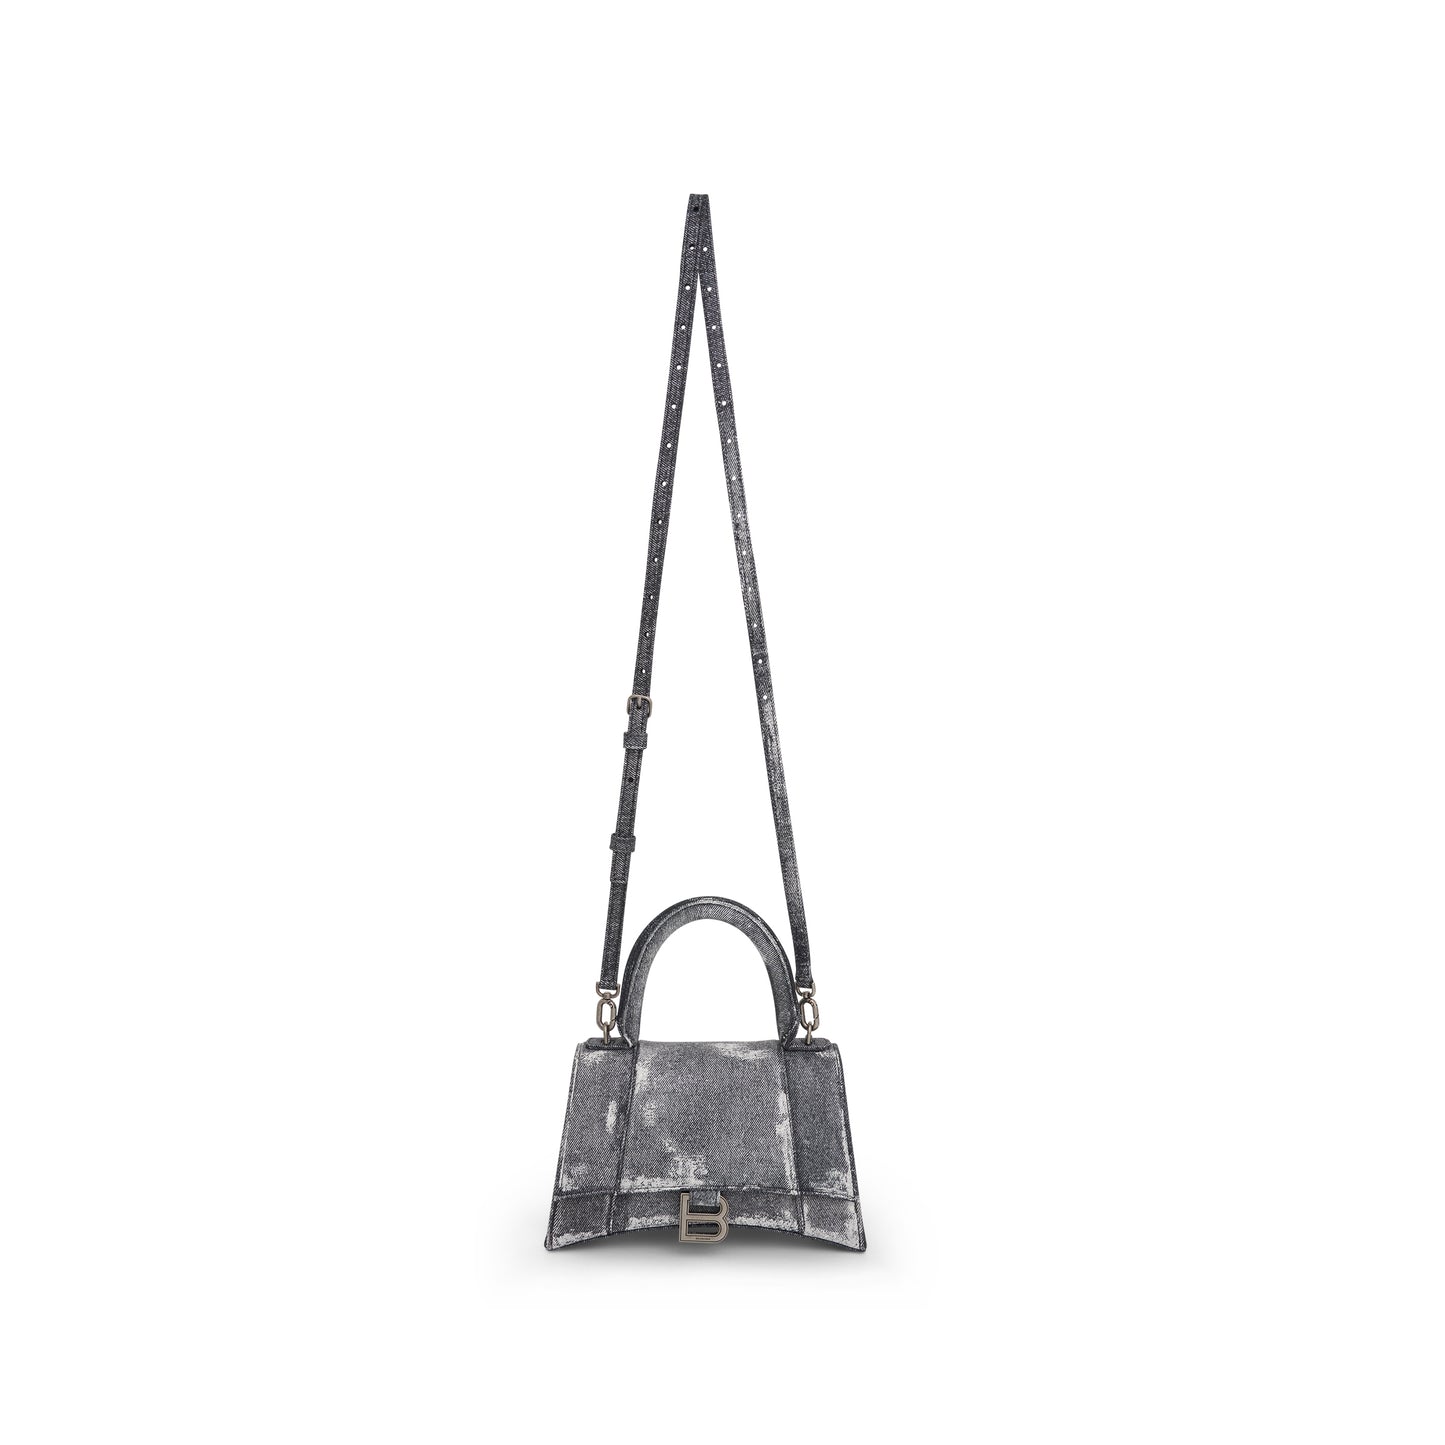 Hourglass Small Handbag in Denim Printed in Black